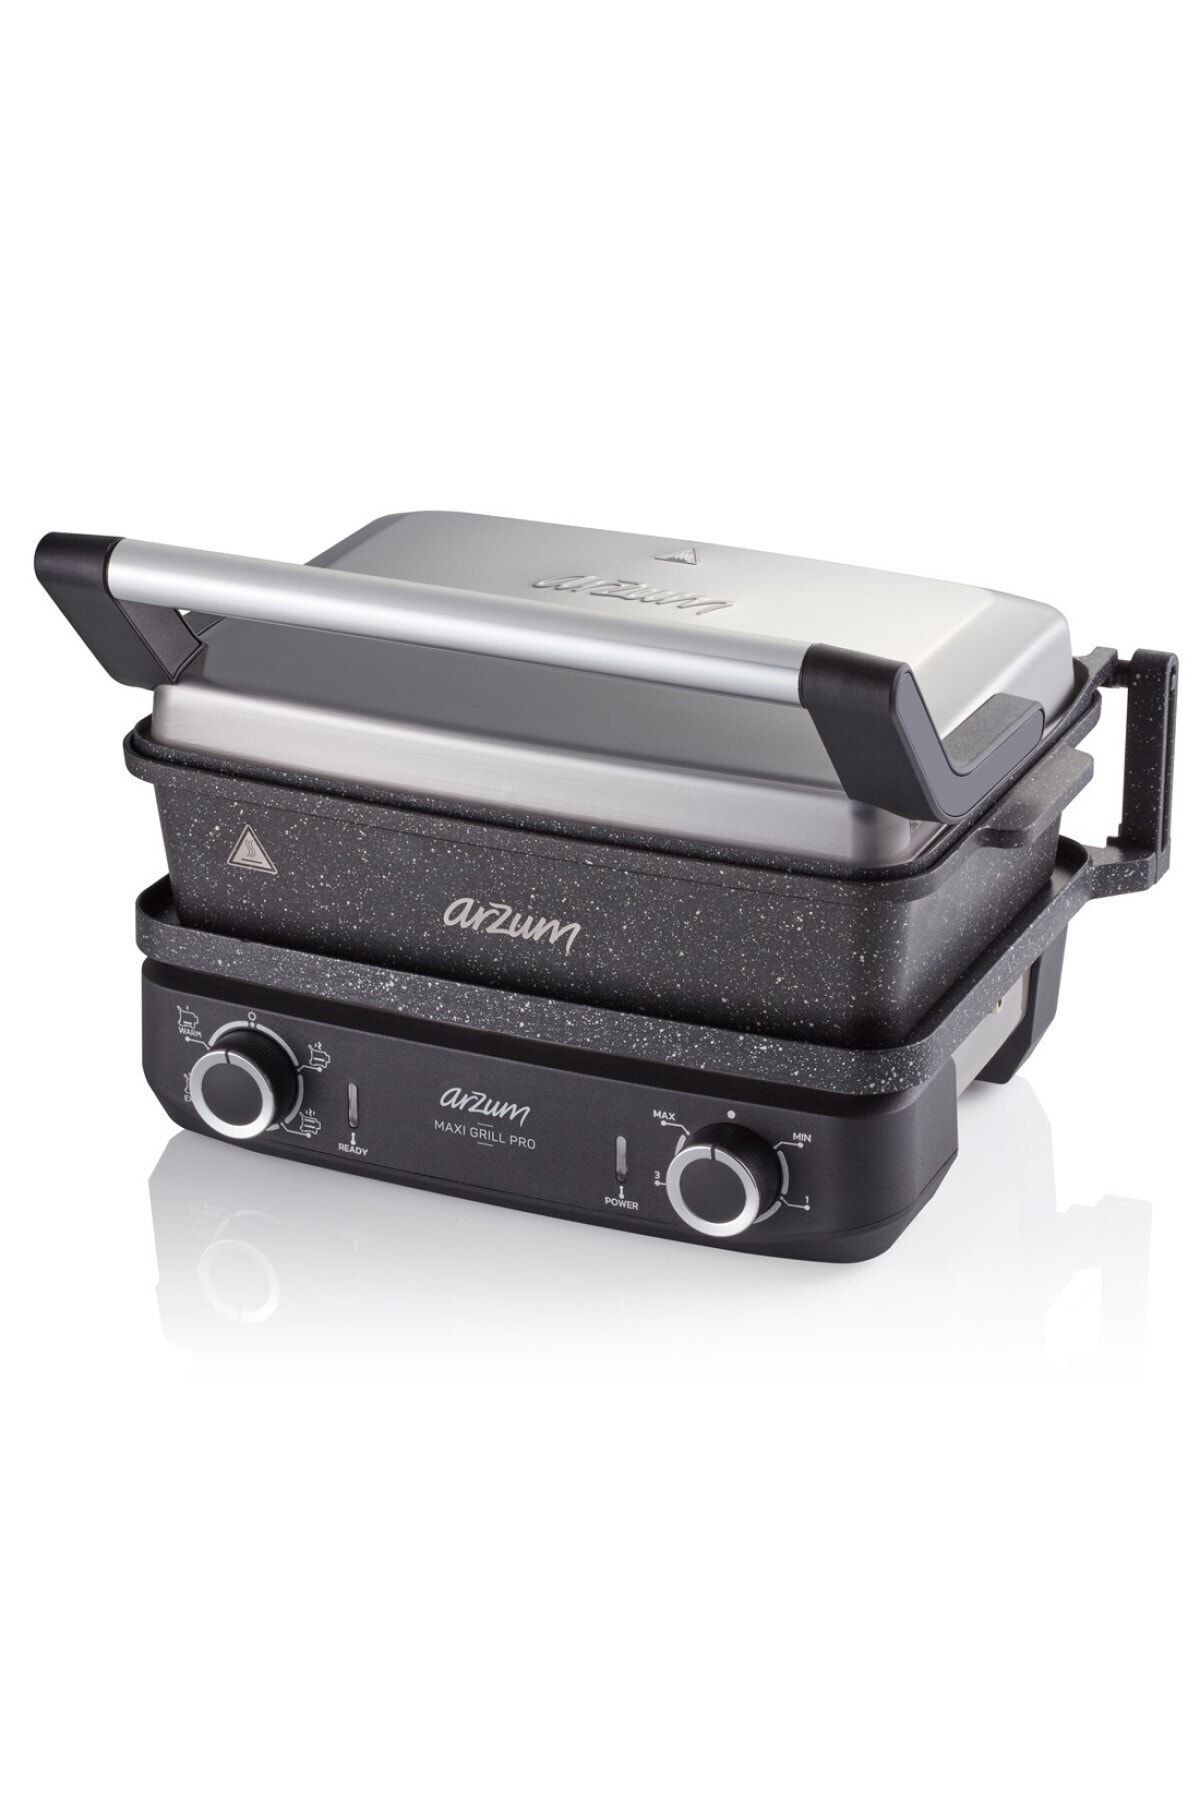 Arzum Ar2048 Maxi Grill Pro Multi Fonksiyonel Pişirici